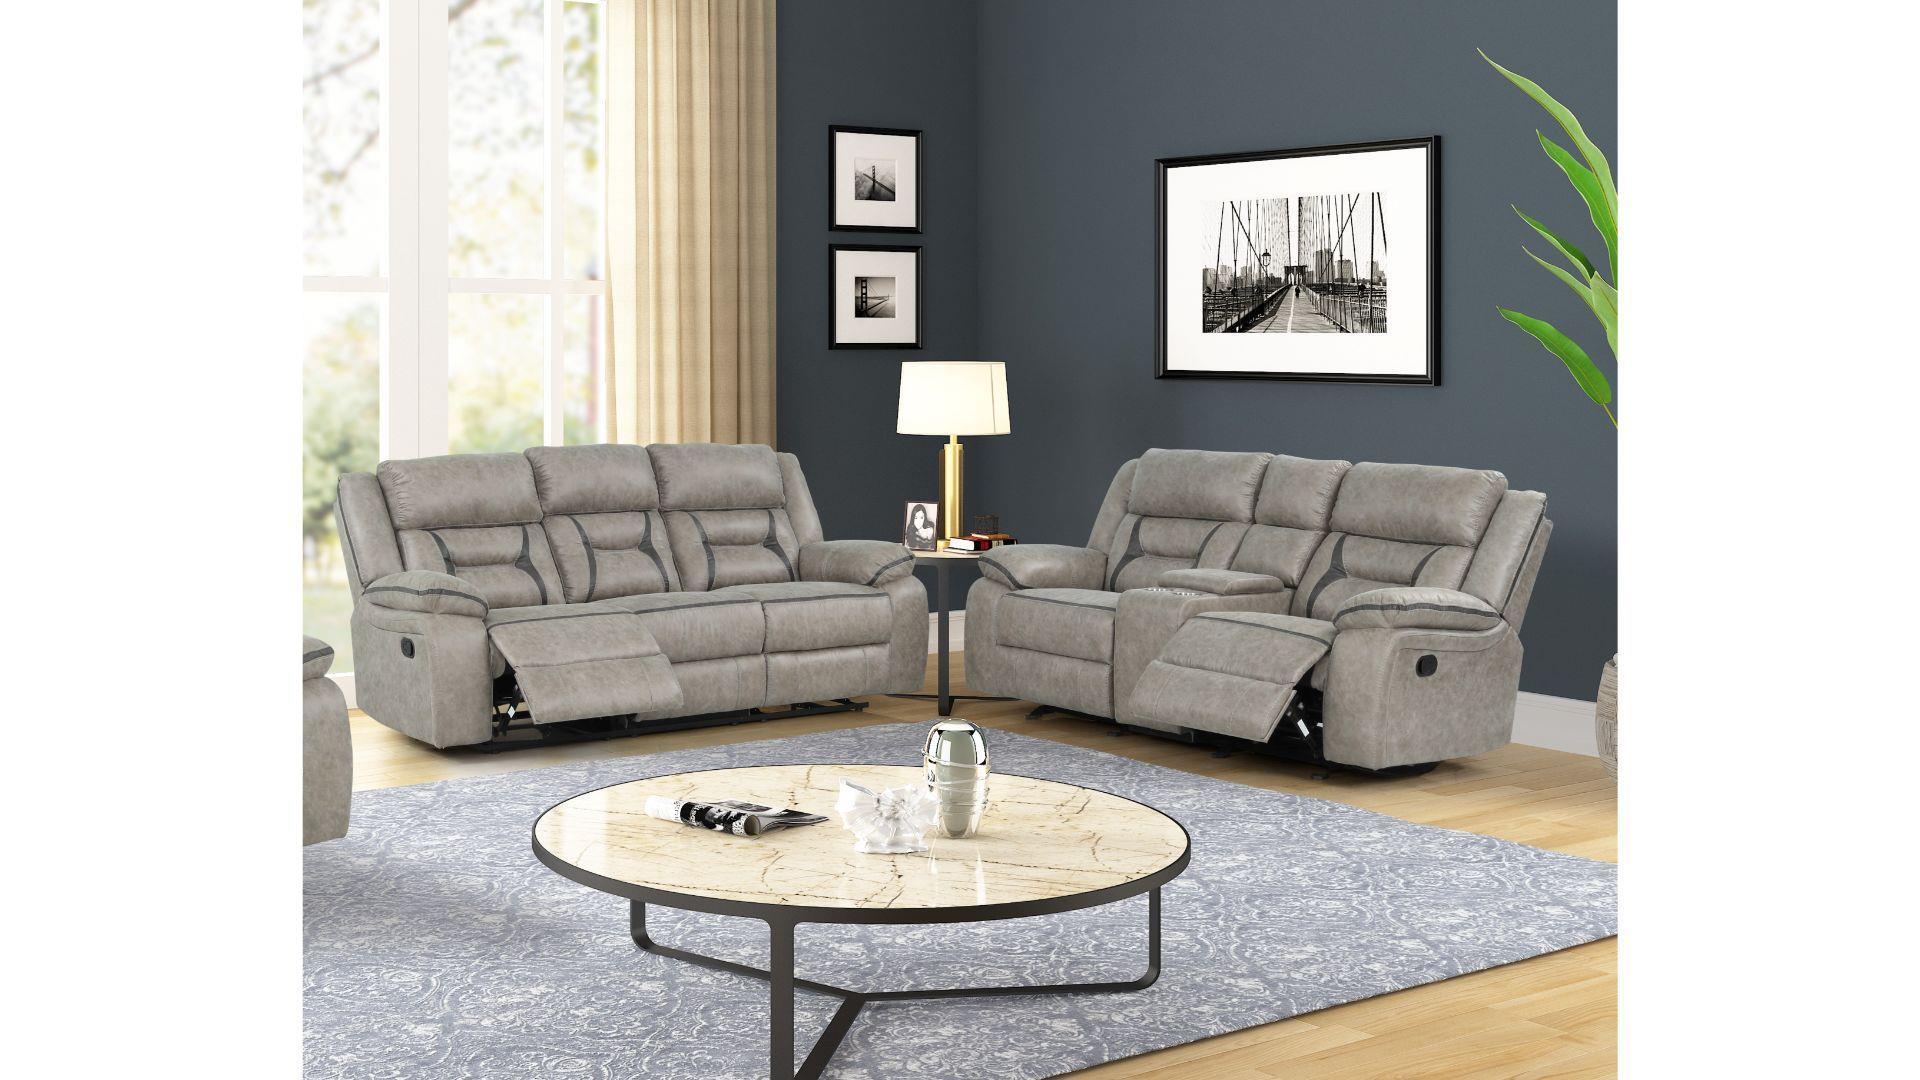 Contemporary, Modern Recliner Sofa Set DENALI DENALI-S-L in Gray Faux Leather